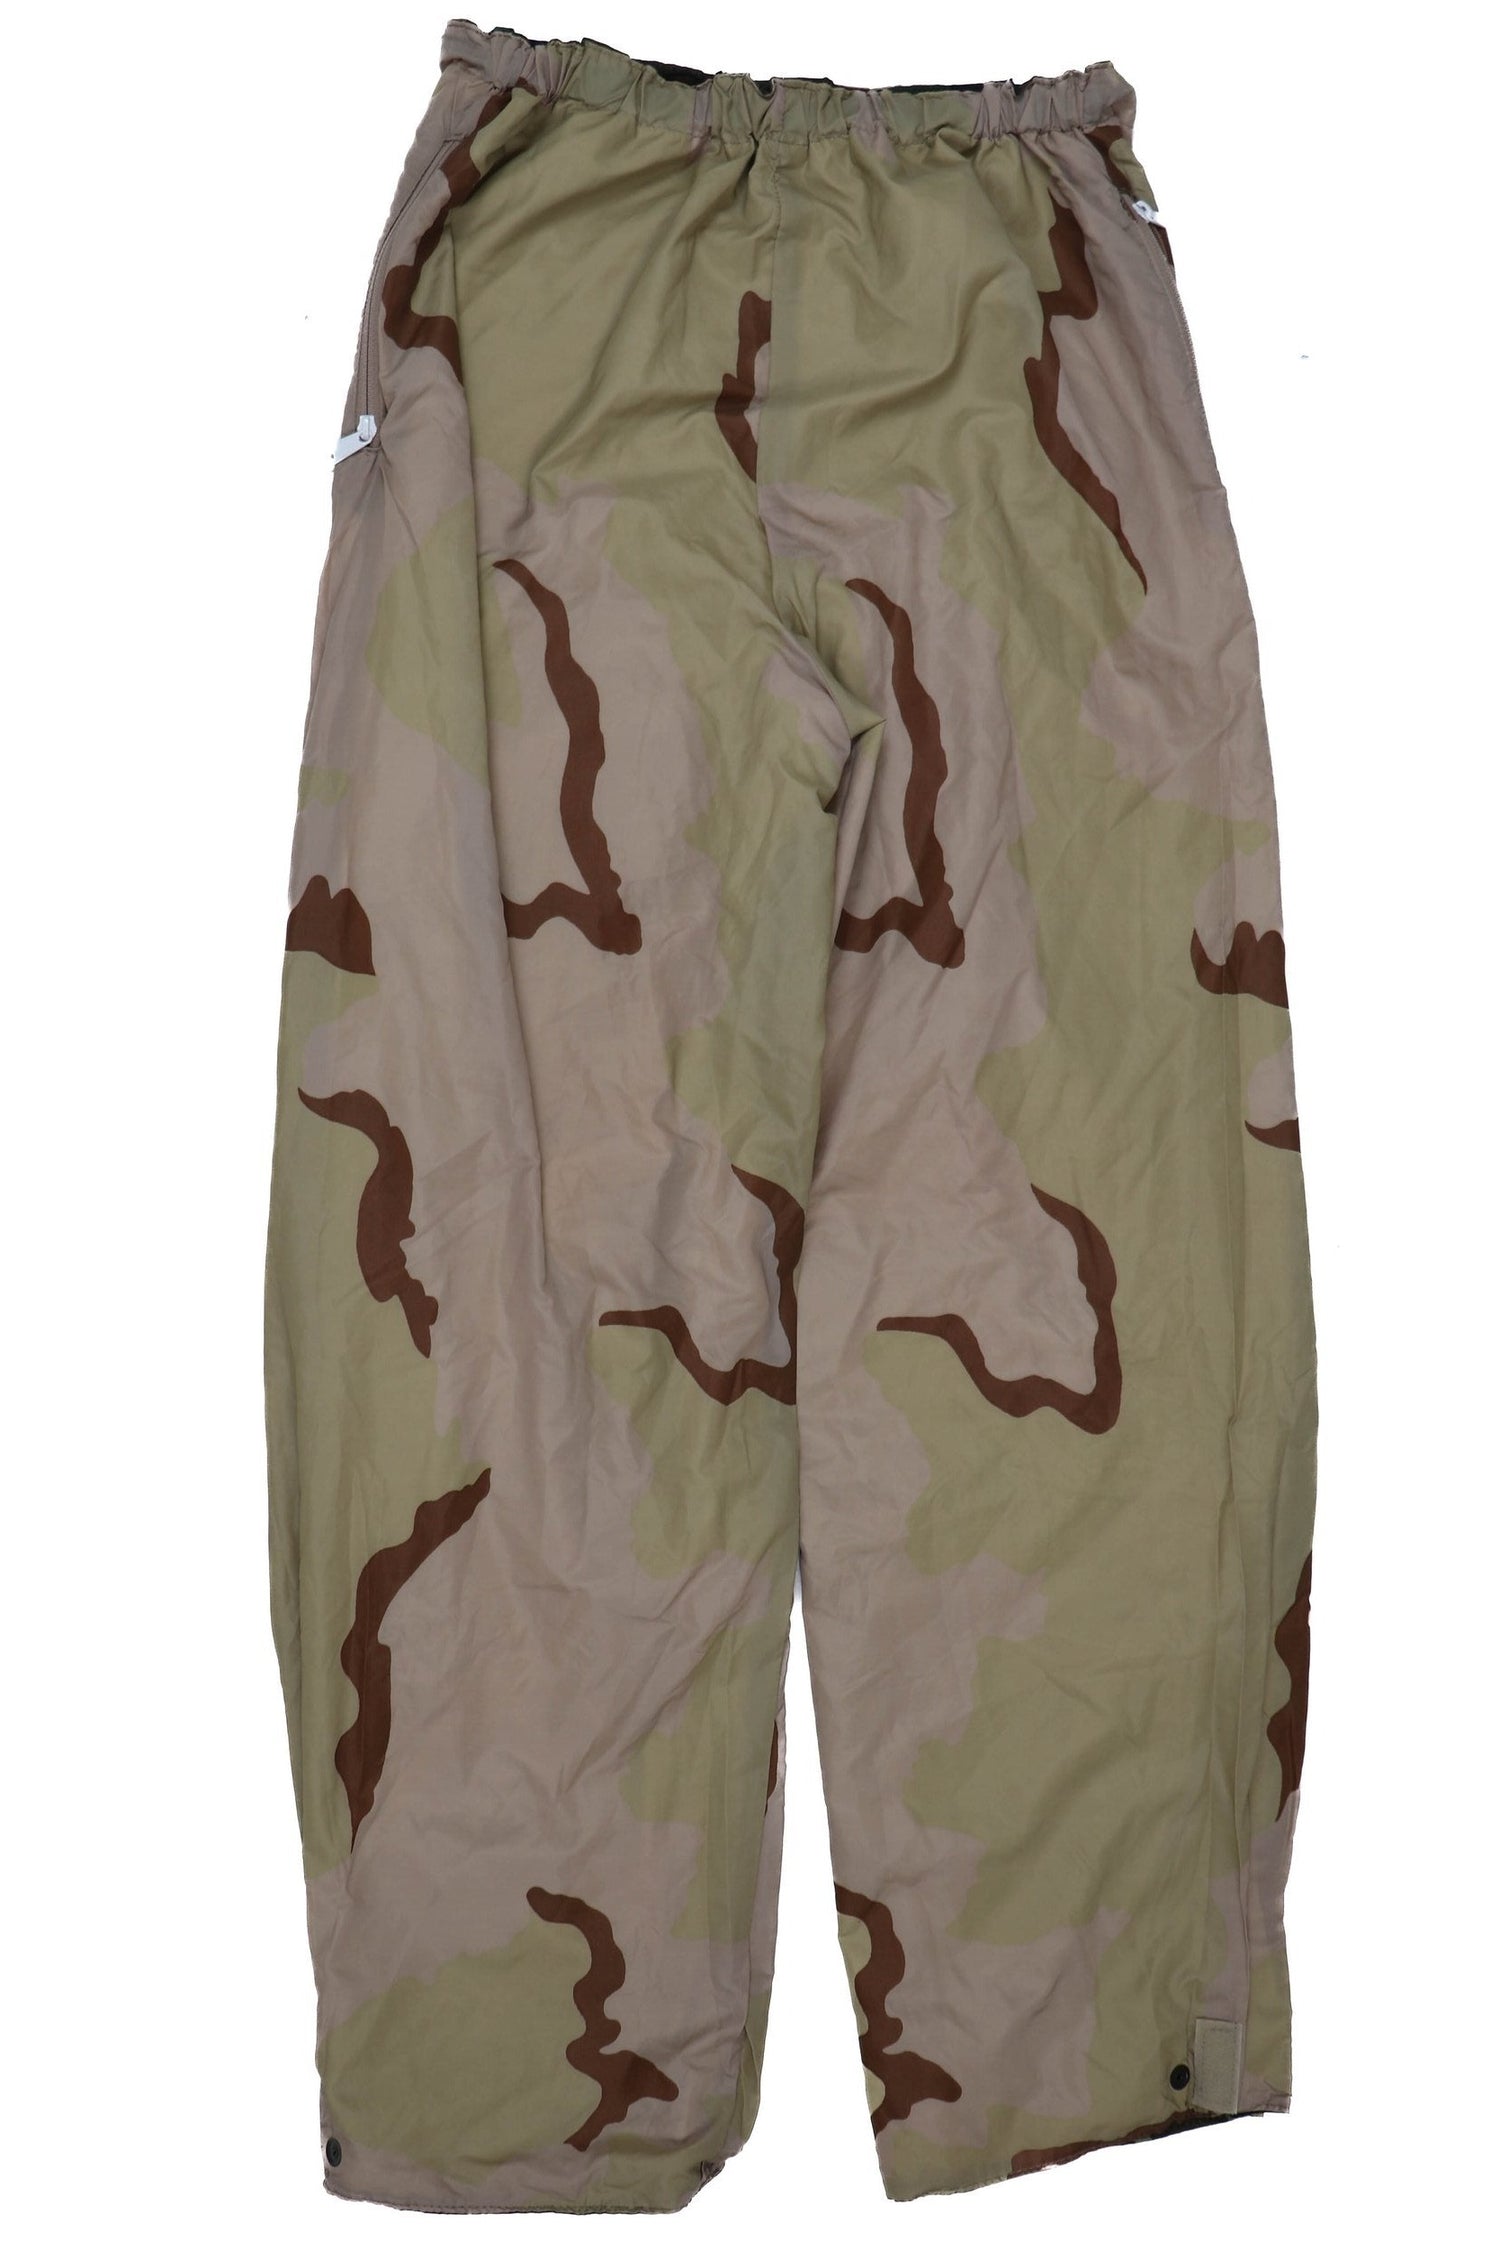 US Military Reversible Woodland M81 / Desert DCU GoreTex Pants